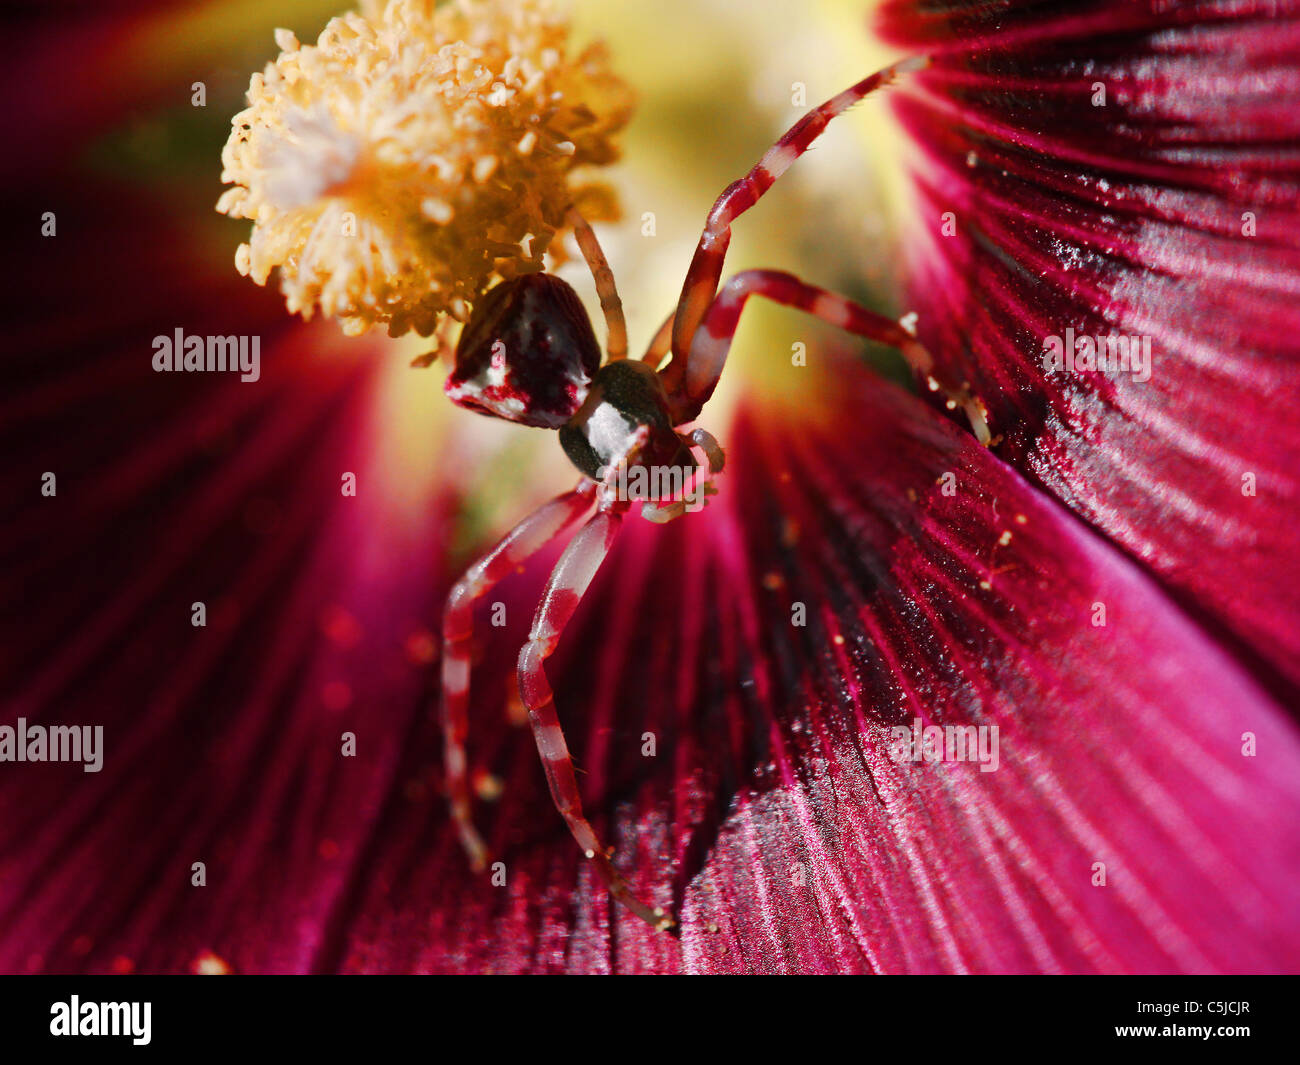 Spider on flower Stock Photo